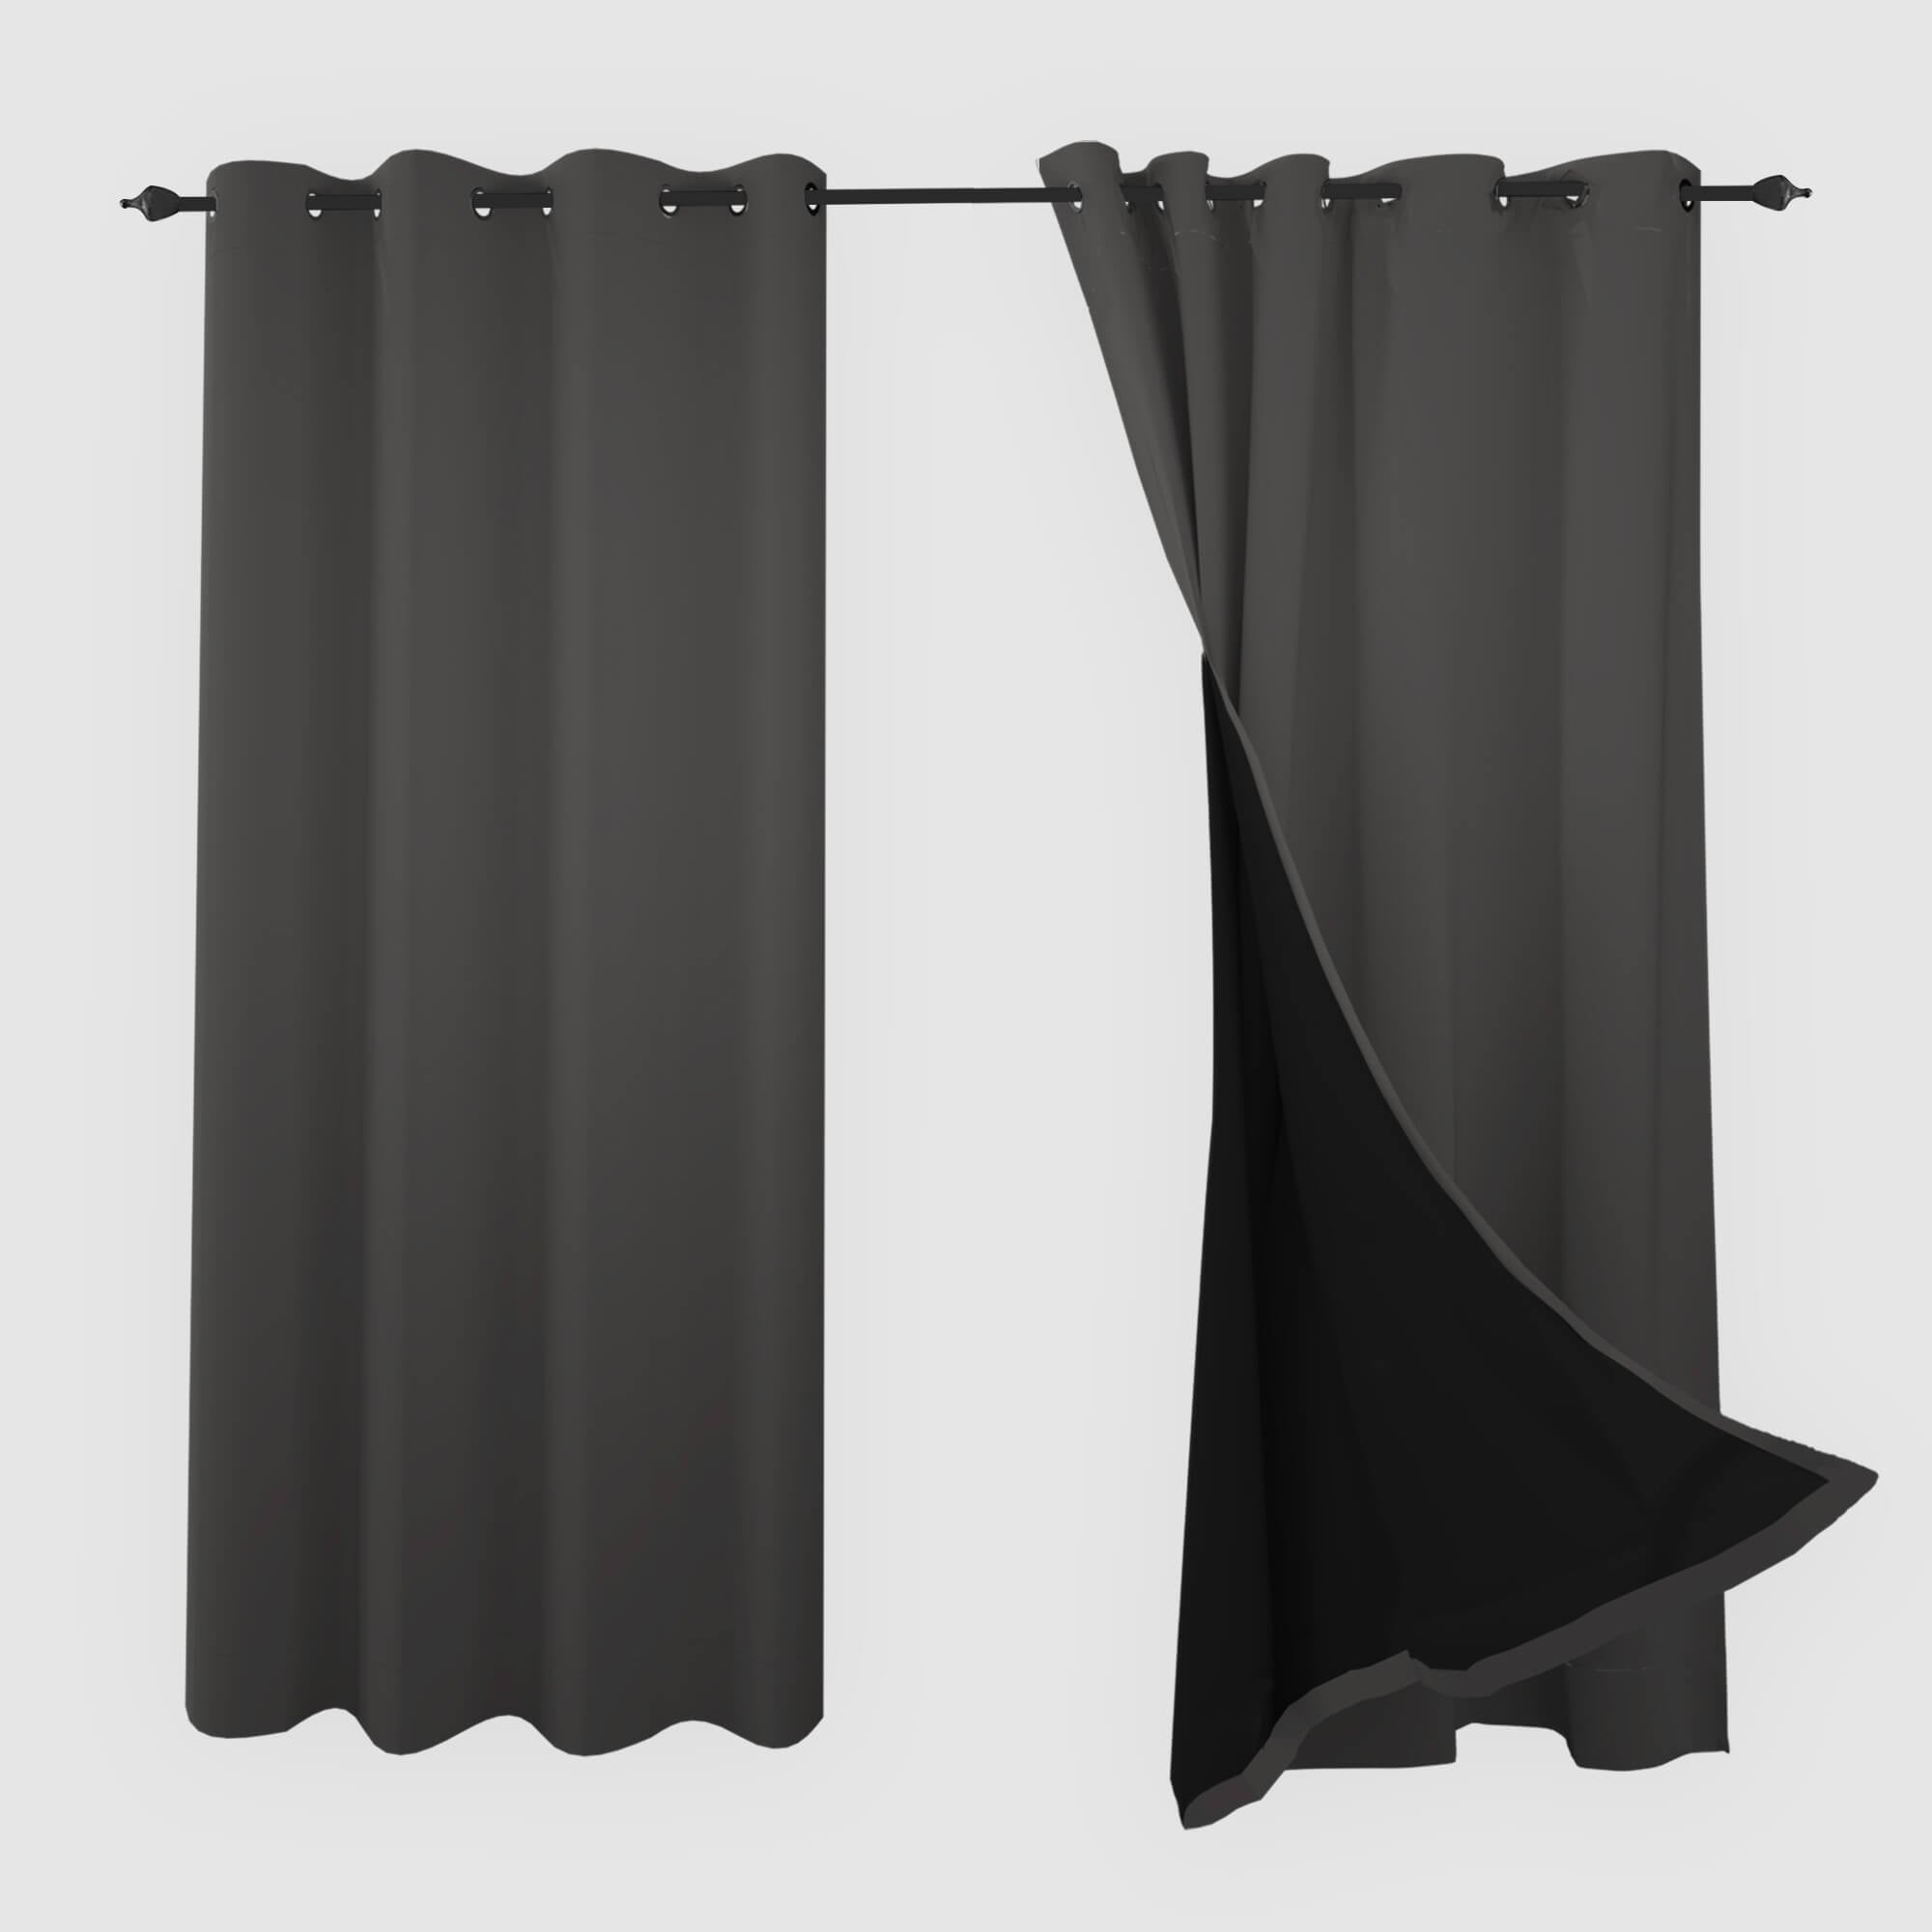 SNOWCITY Blackout Curtains Dark Grey - Grommet Top